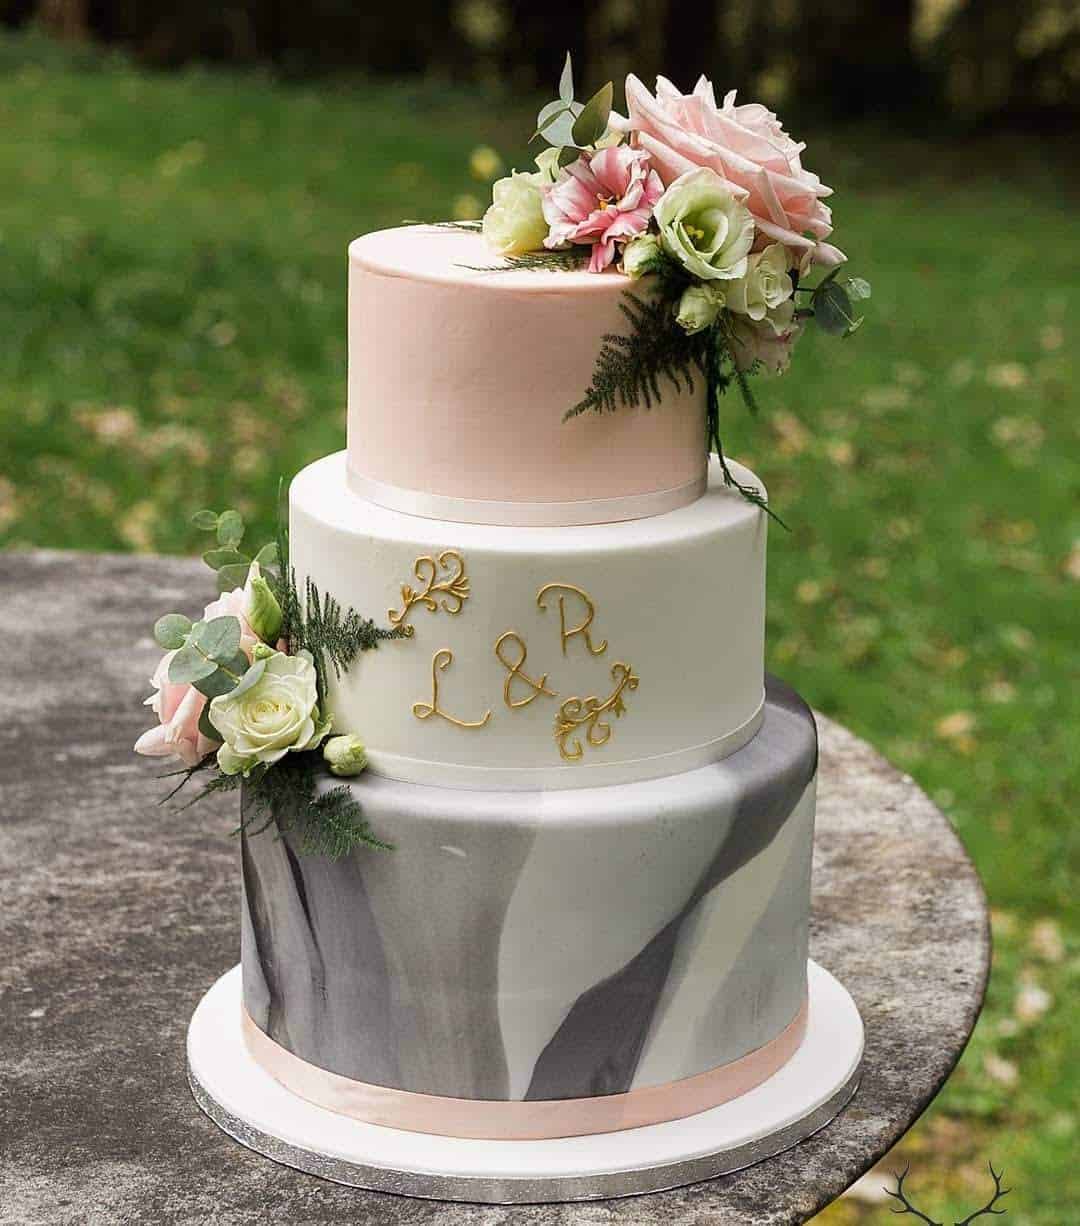 cakes-by-nikki-sloan-scottish-borders-wedding-cake-designer-marble-flowers